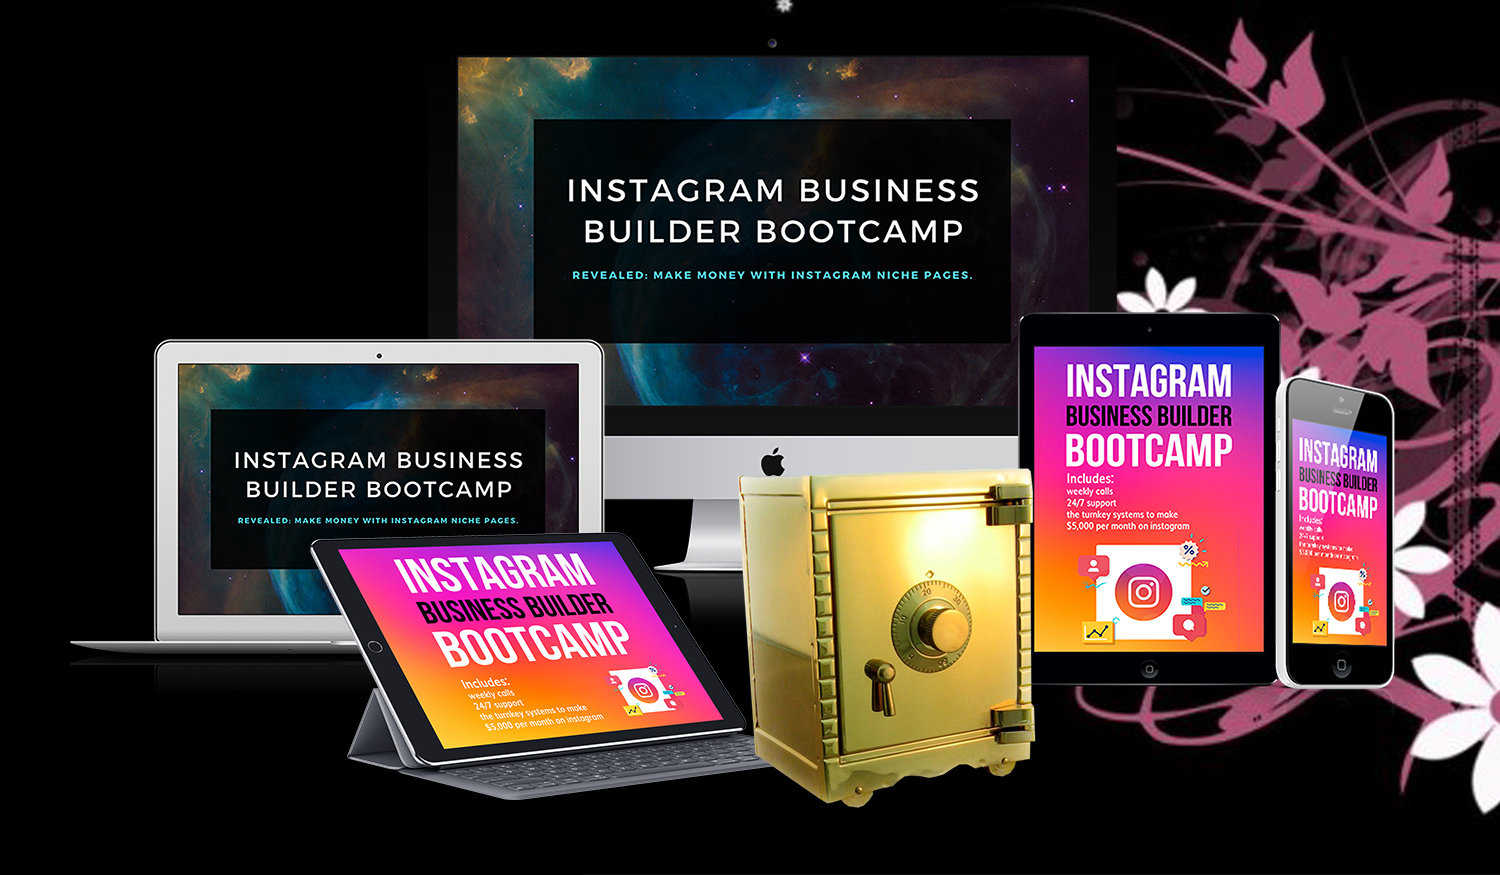 Julian - Instagram Business Builder Bootcamp